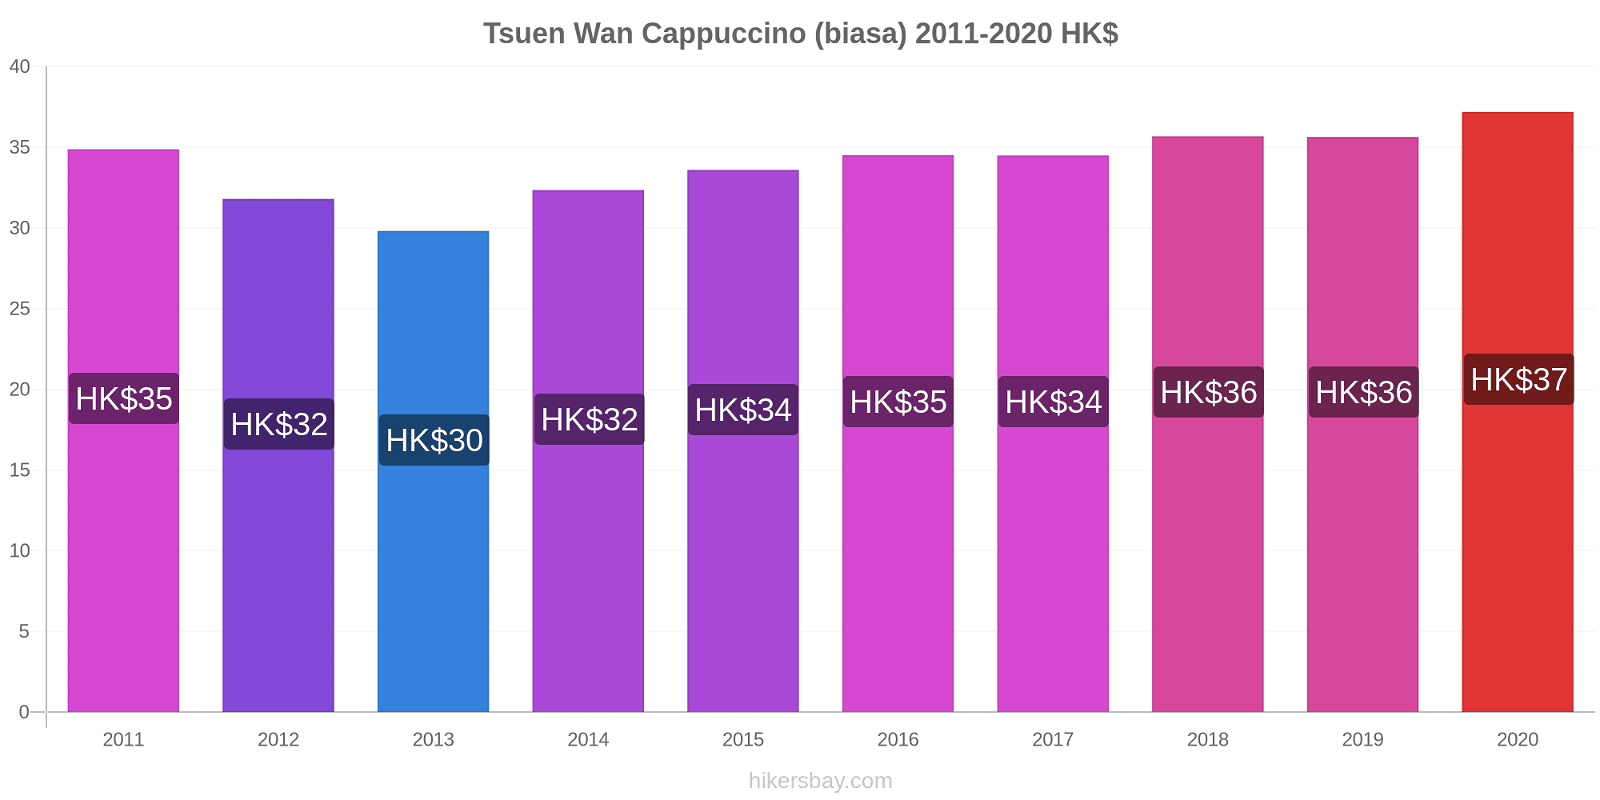 Tsuen Wan perubahan harga Cappuccino (biasa) hikersbay.com